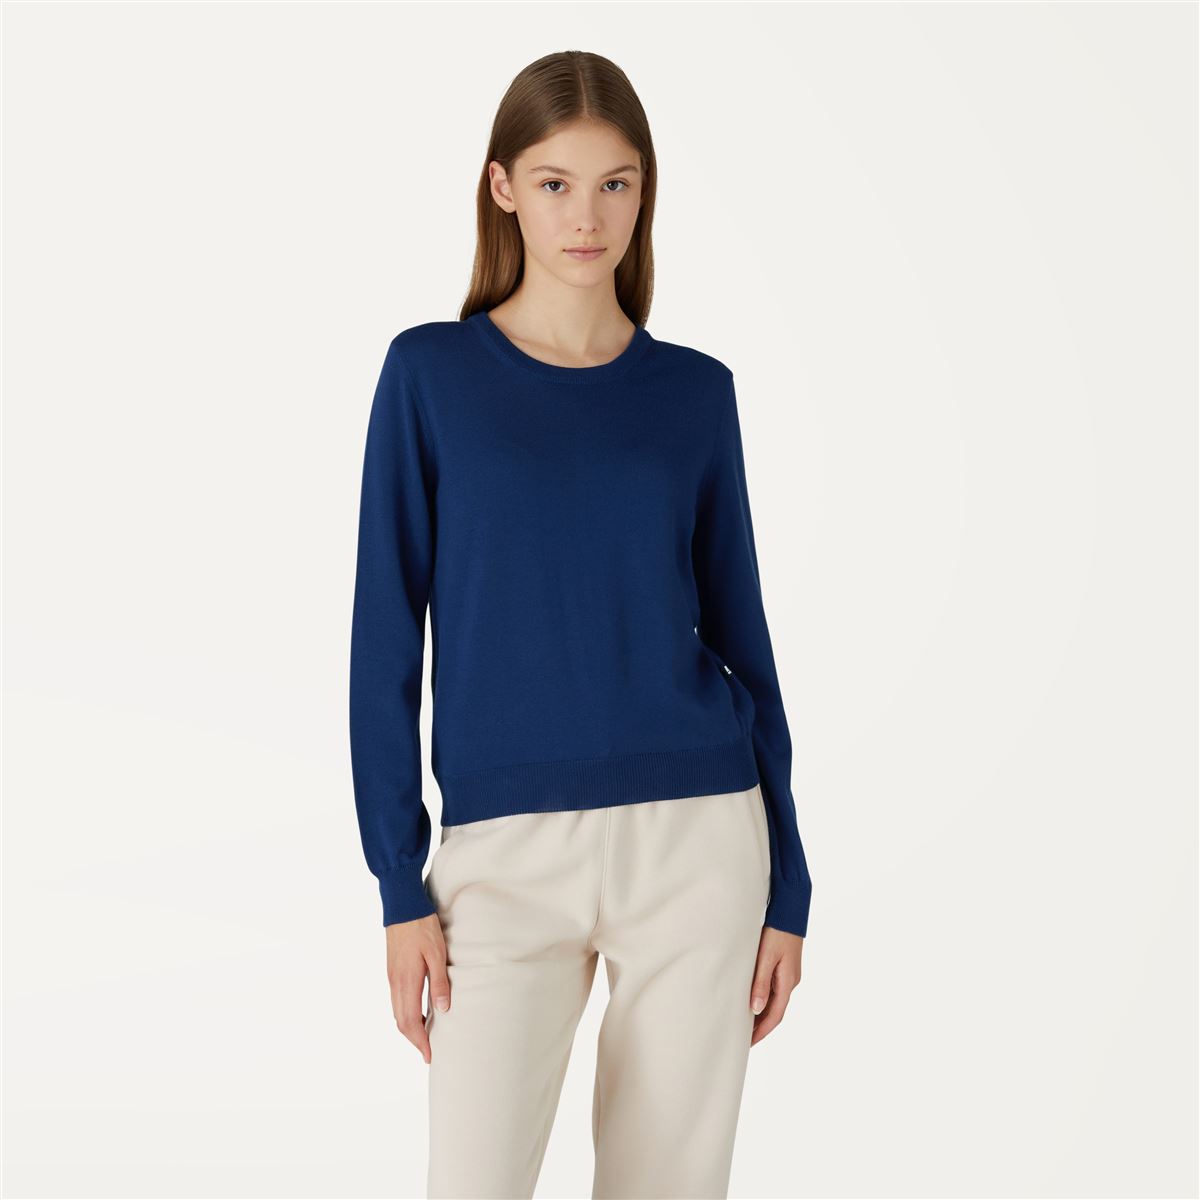 ABBI MERINO - Knitwear - Pull  Over - Woman - Blue